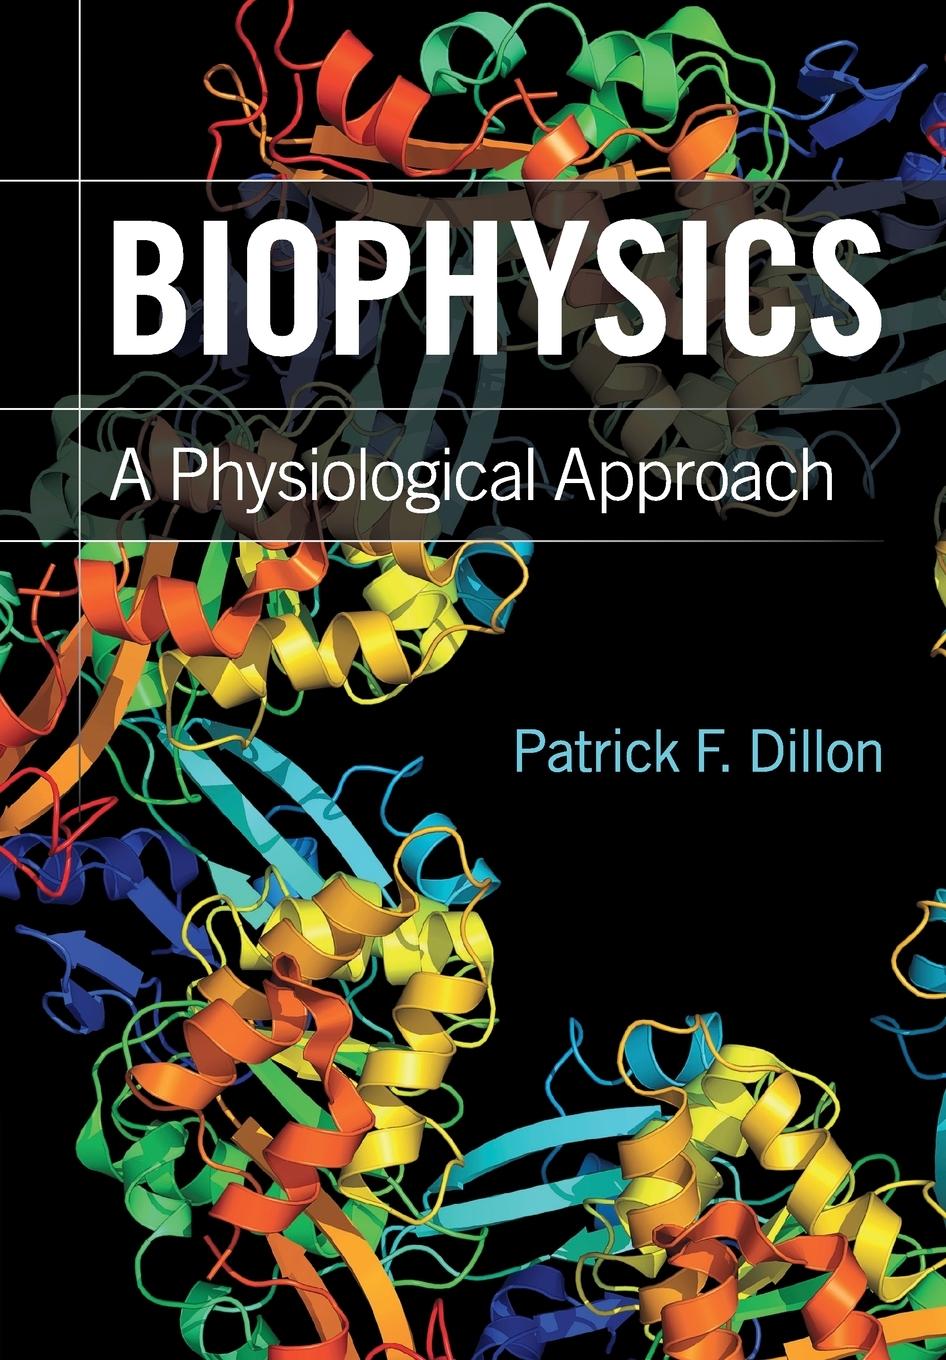 Biophysics: A Physiological Approach. Patrick F. Dillon - Dillon, Patrick F.